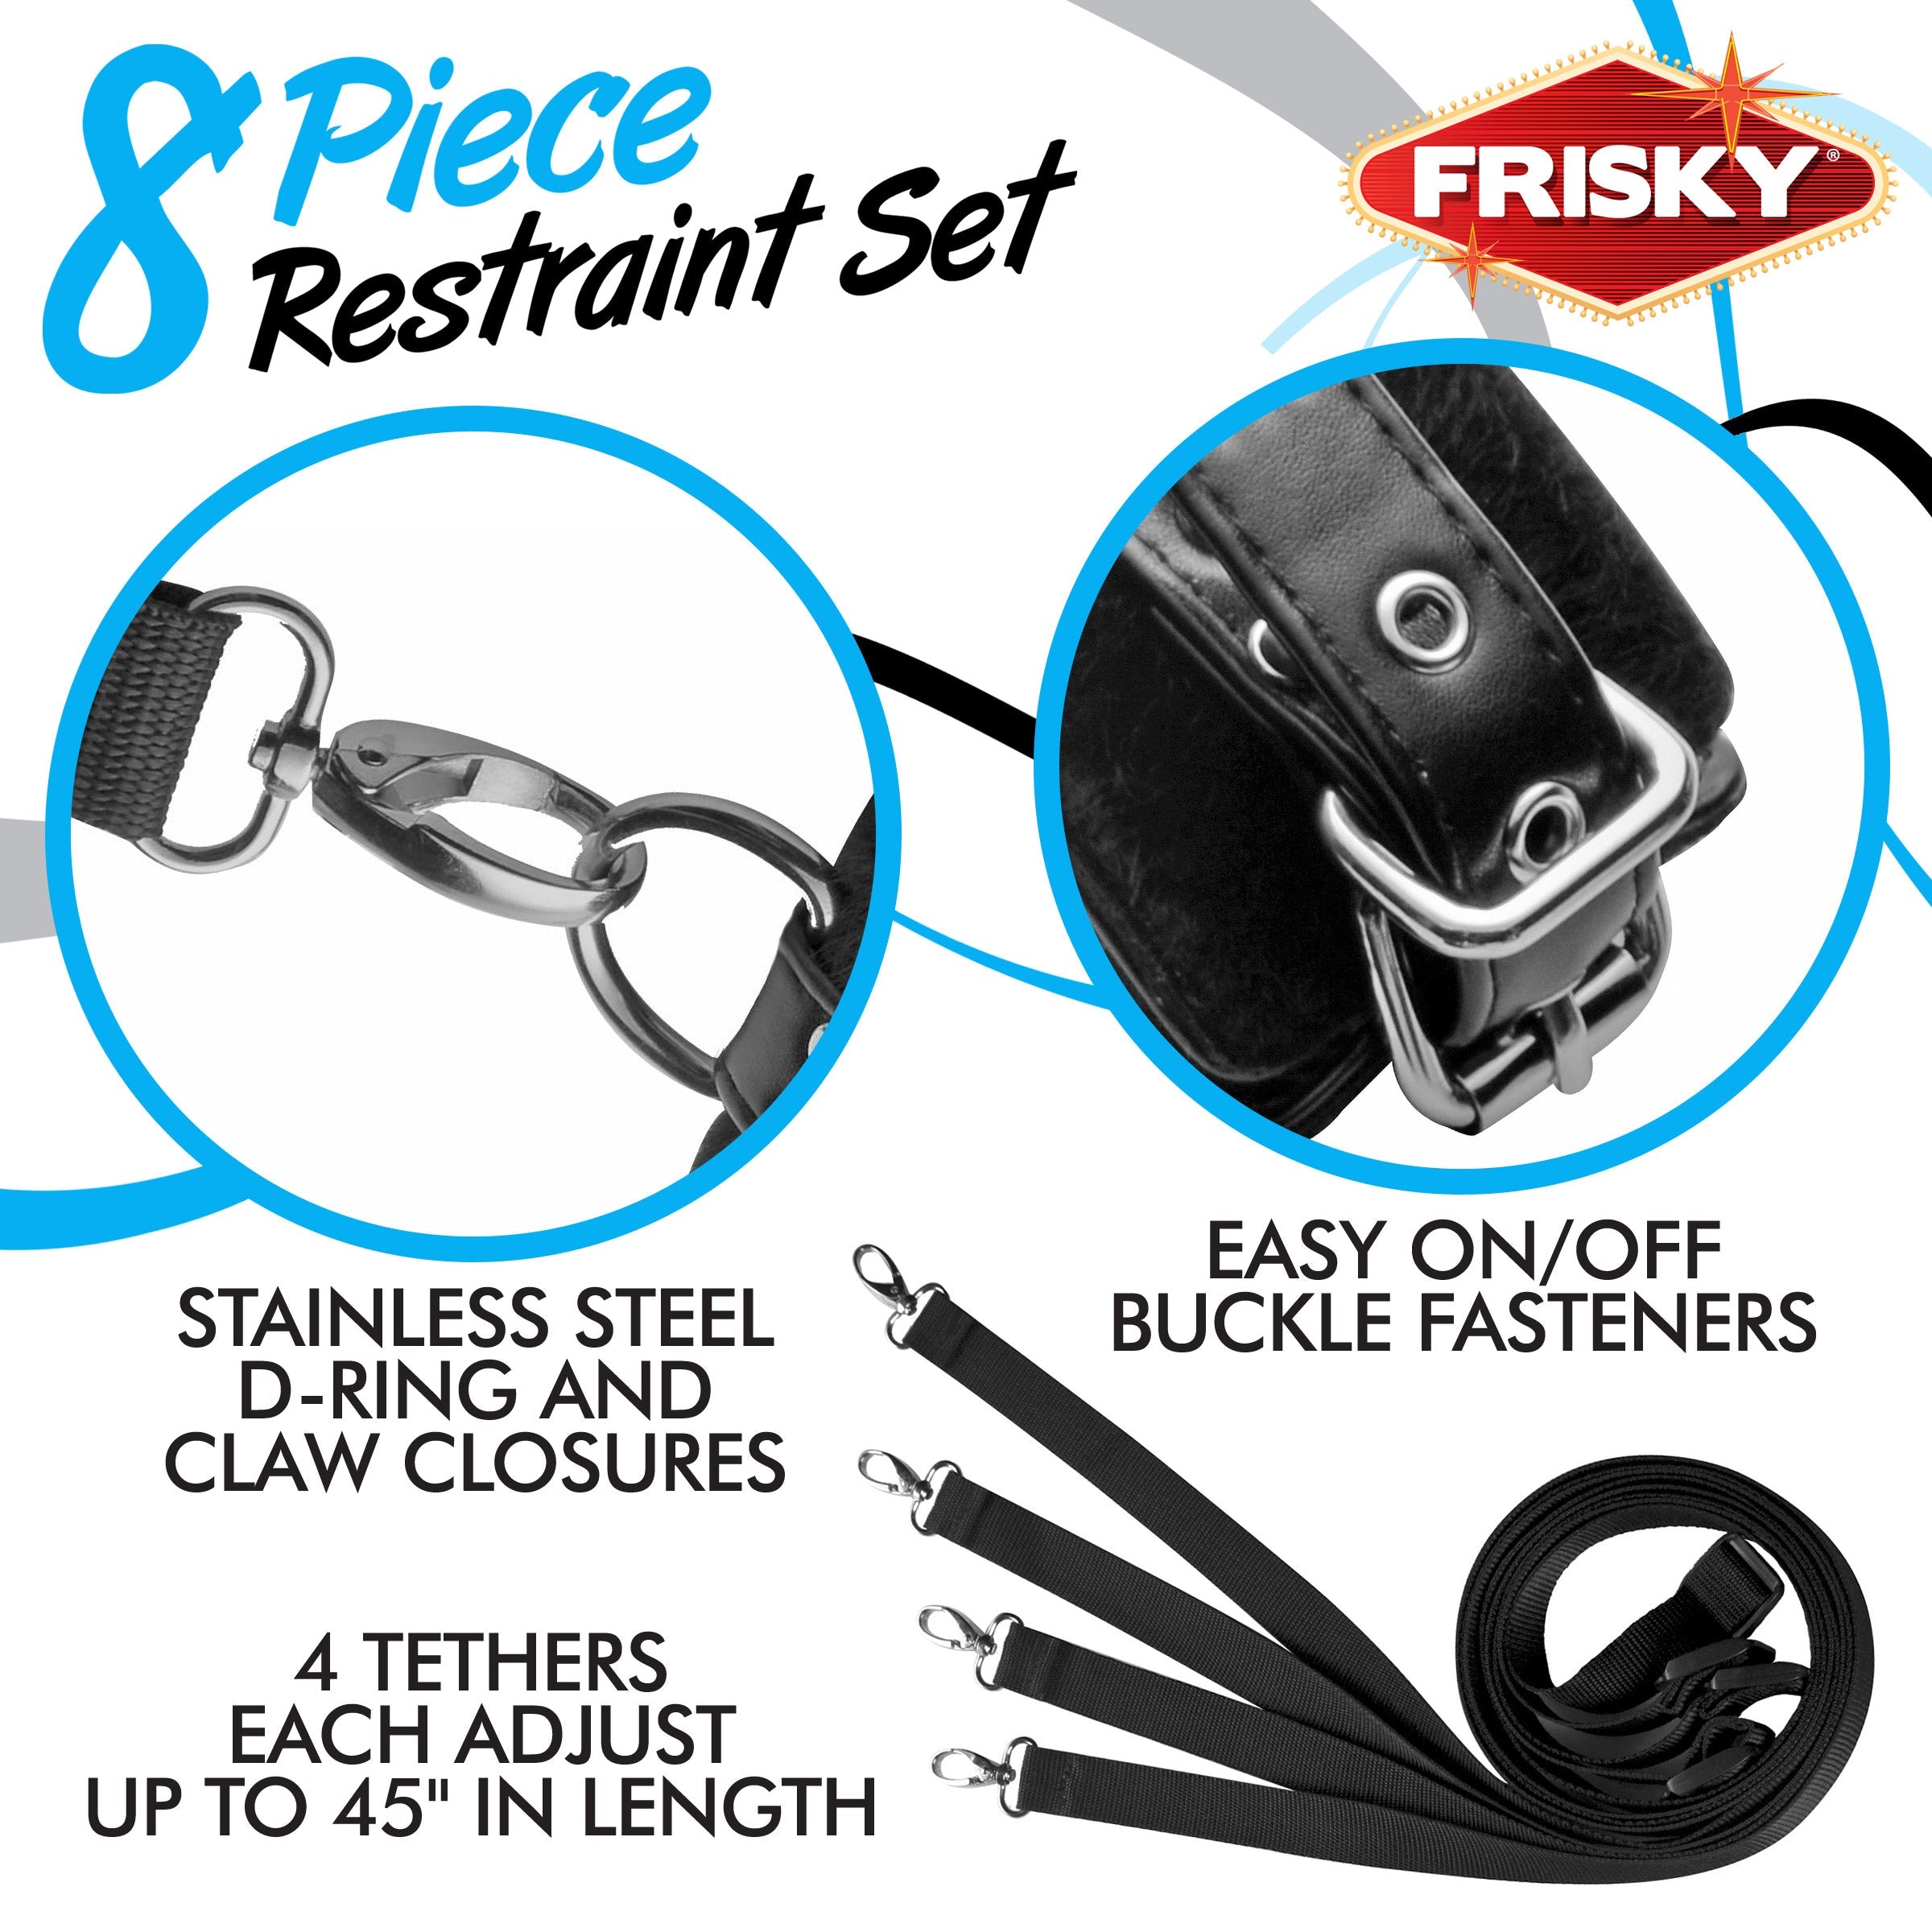 Frisky 8-Piece Restraint Set